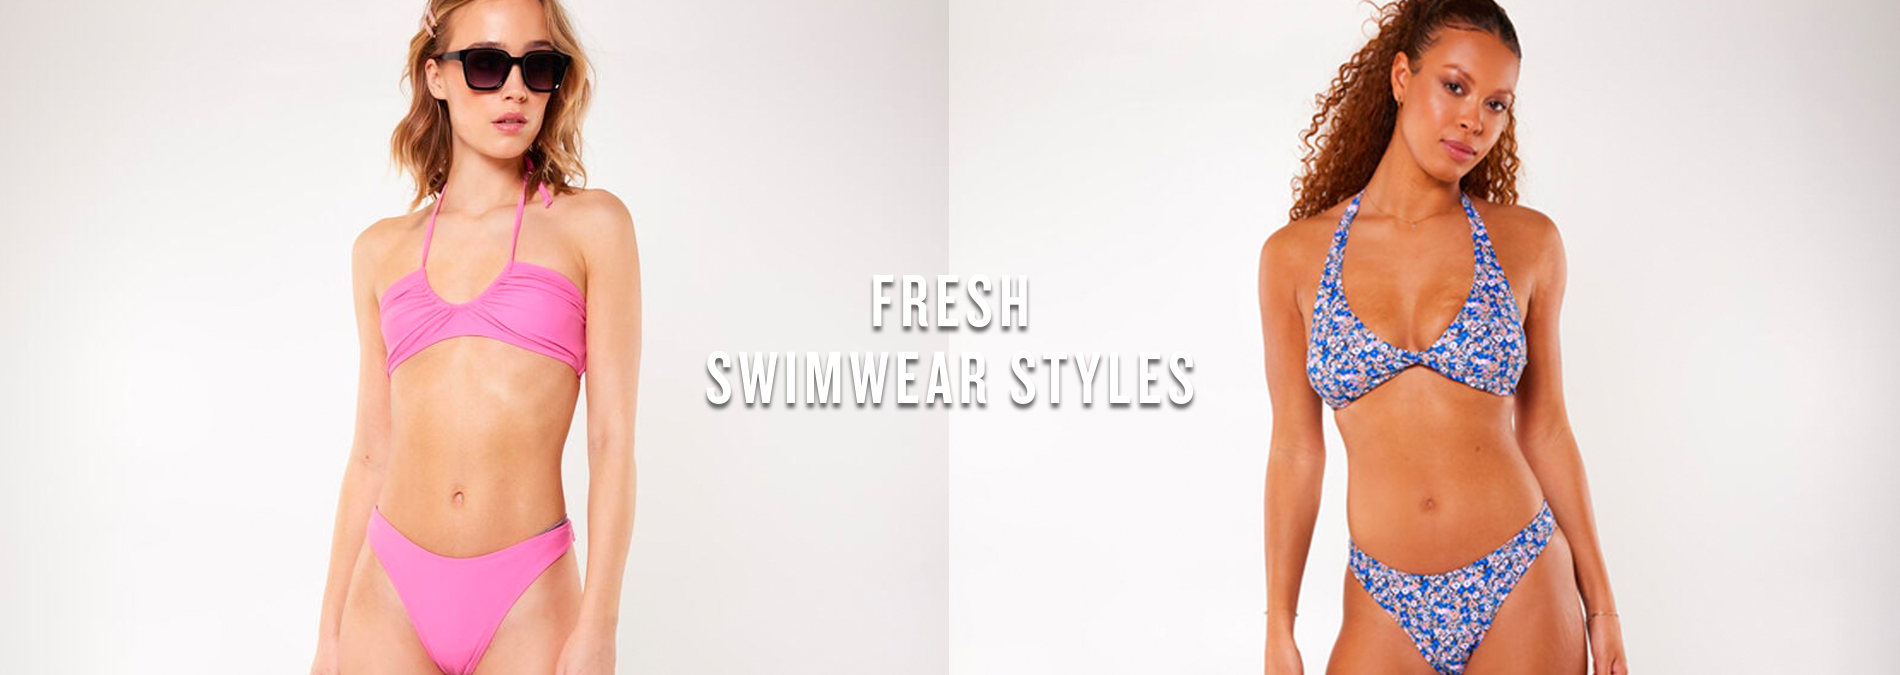 Fresh swimwear styles | America Today | America Today